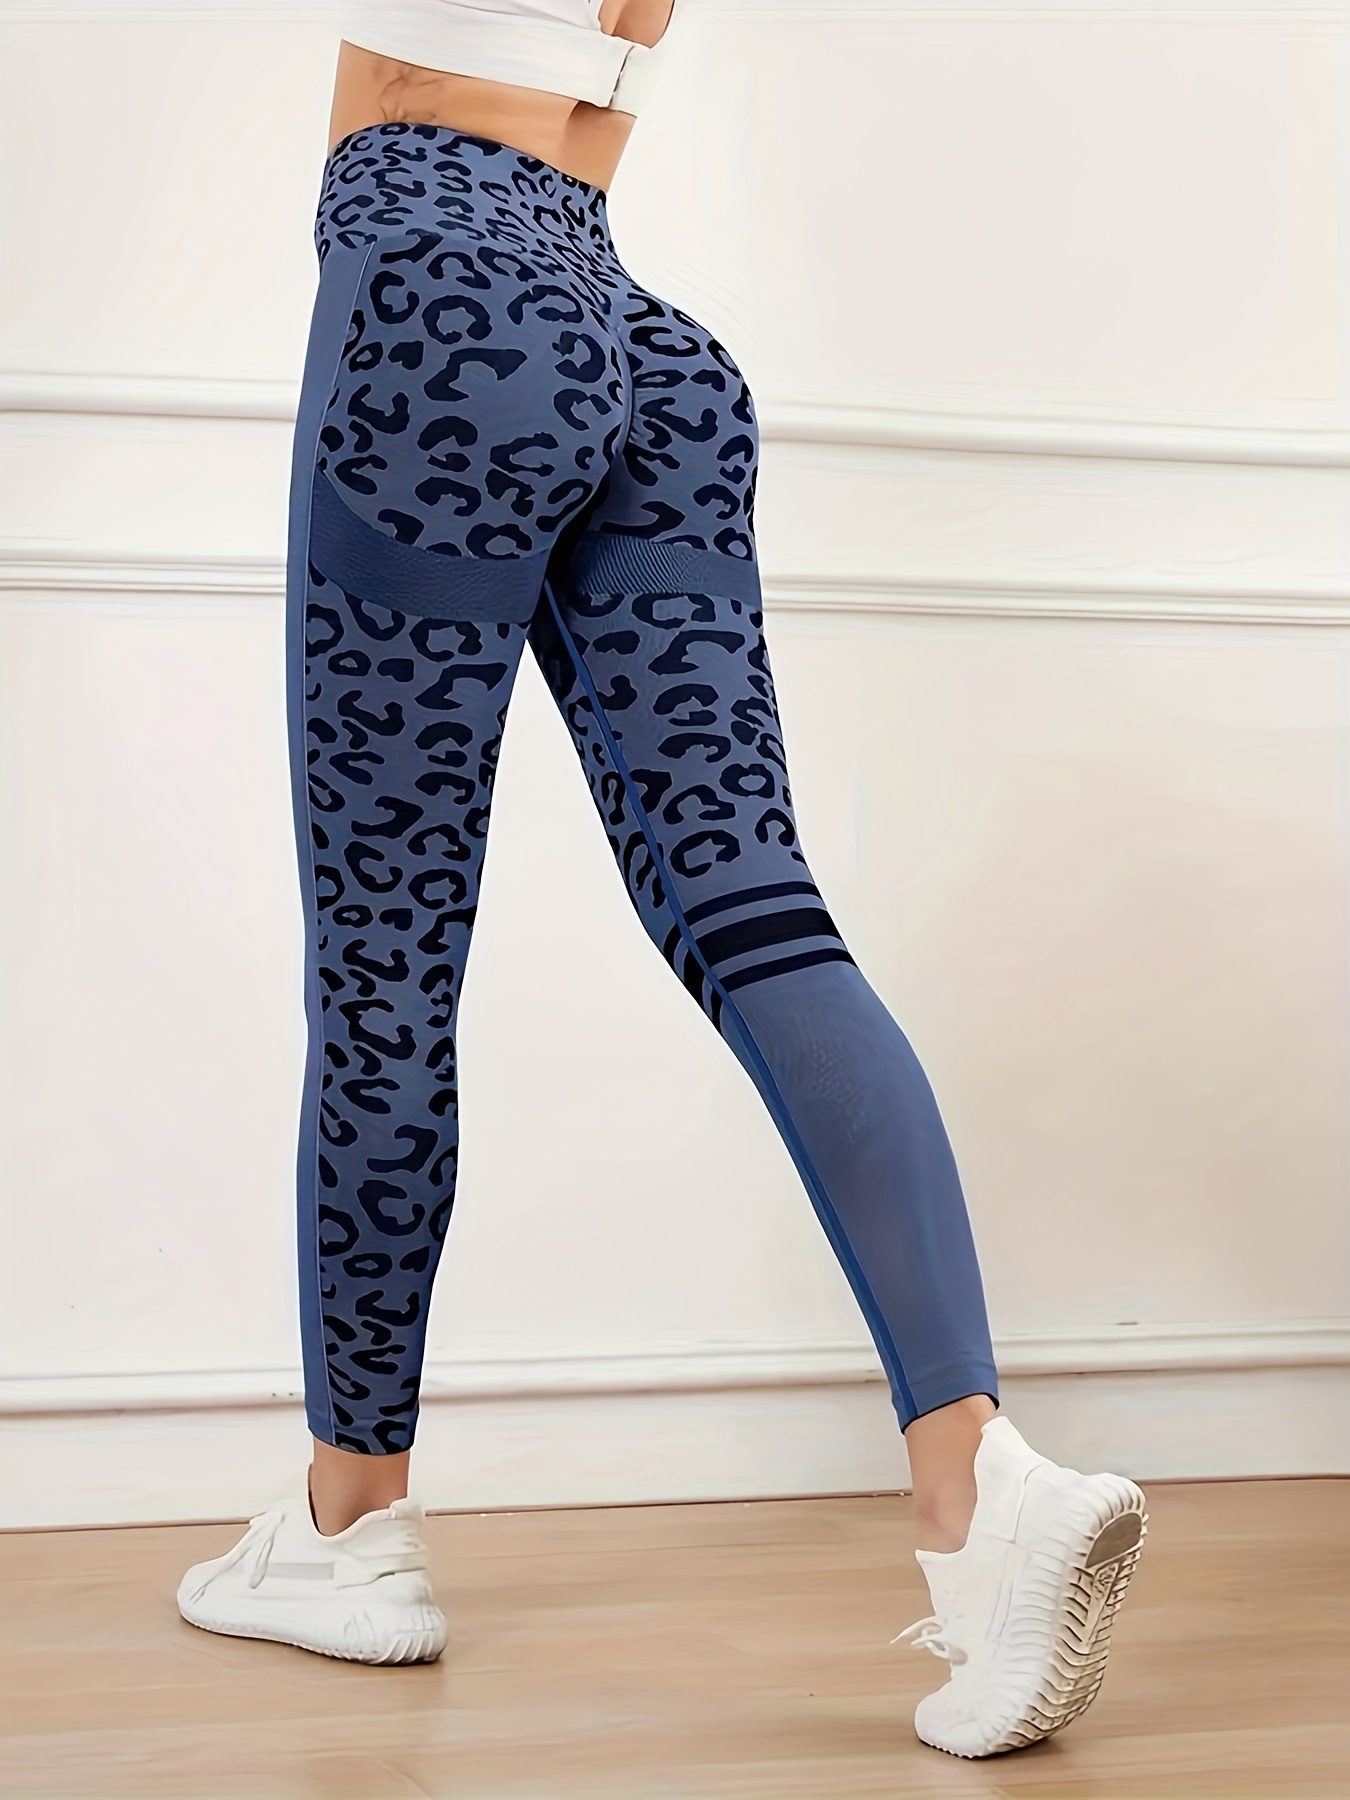 Carbon38 Leopard Print High Rise Leggings Size XS Blue Black Yoga Fitness  Pants